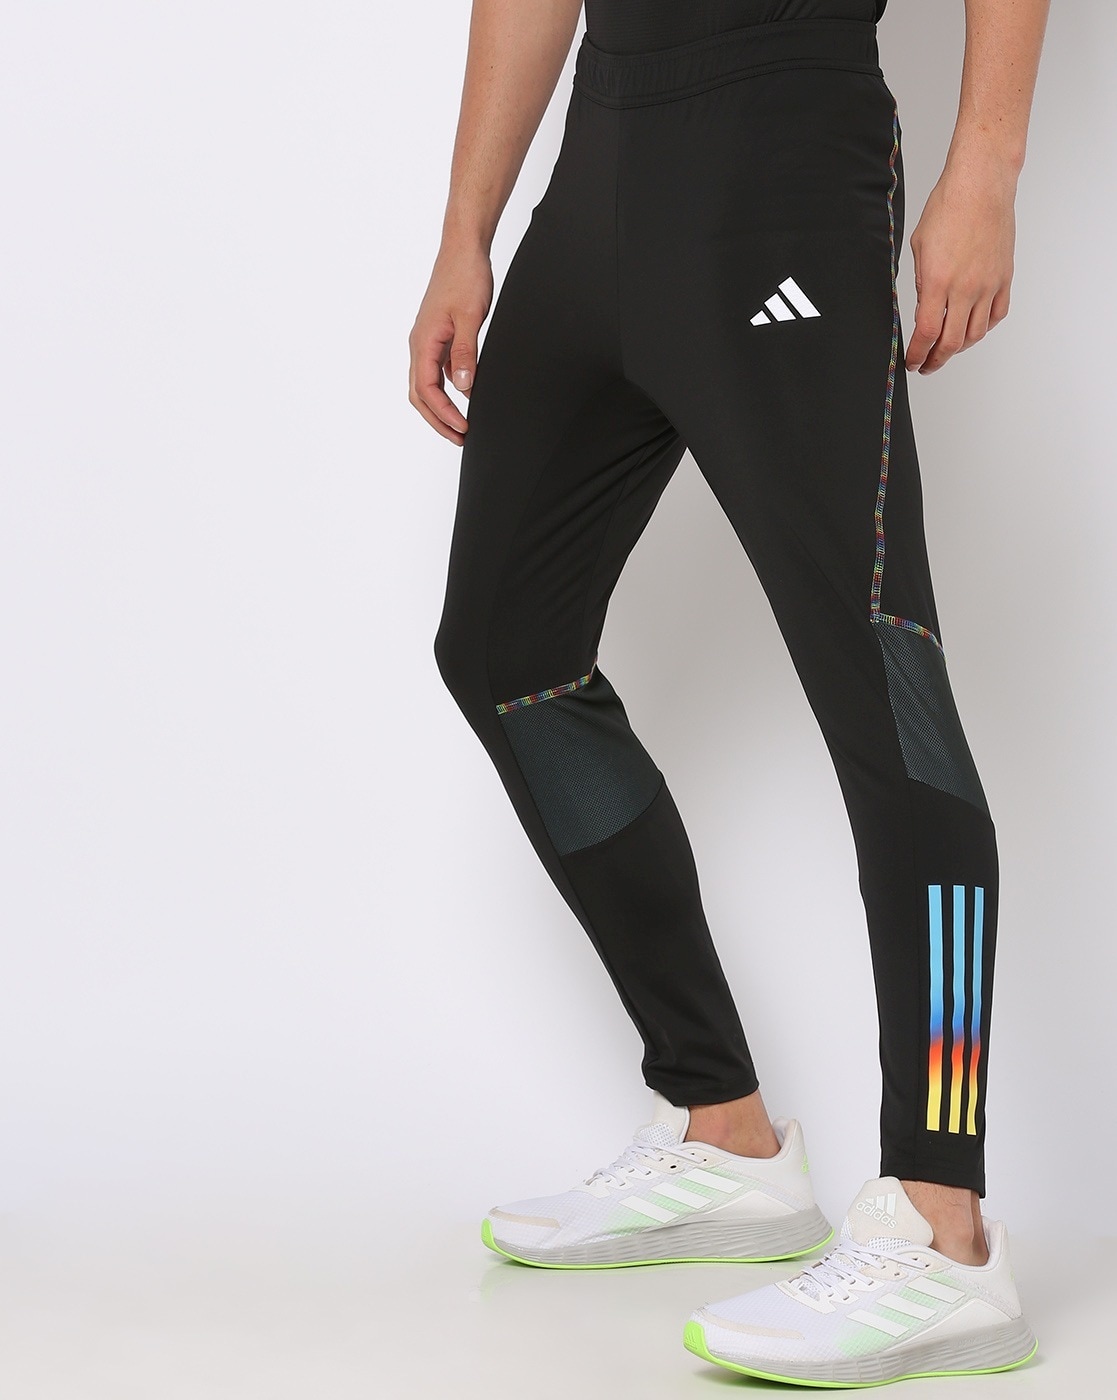 Track Pant AdidasLower For MenBottom WearBlack Color